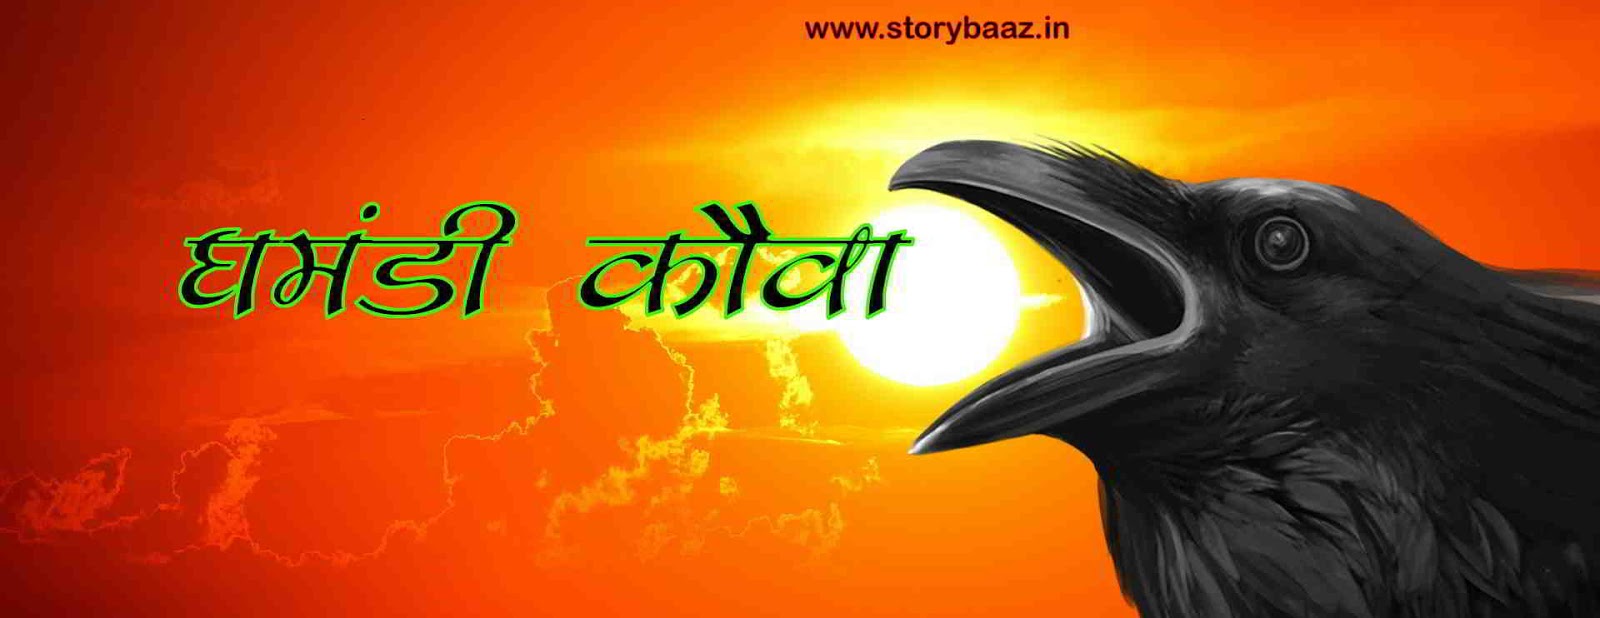 top-10-moral-stories-in-hindi-for-kids-hindi-stories-with-moral-storybaaz.in-storybaaz